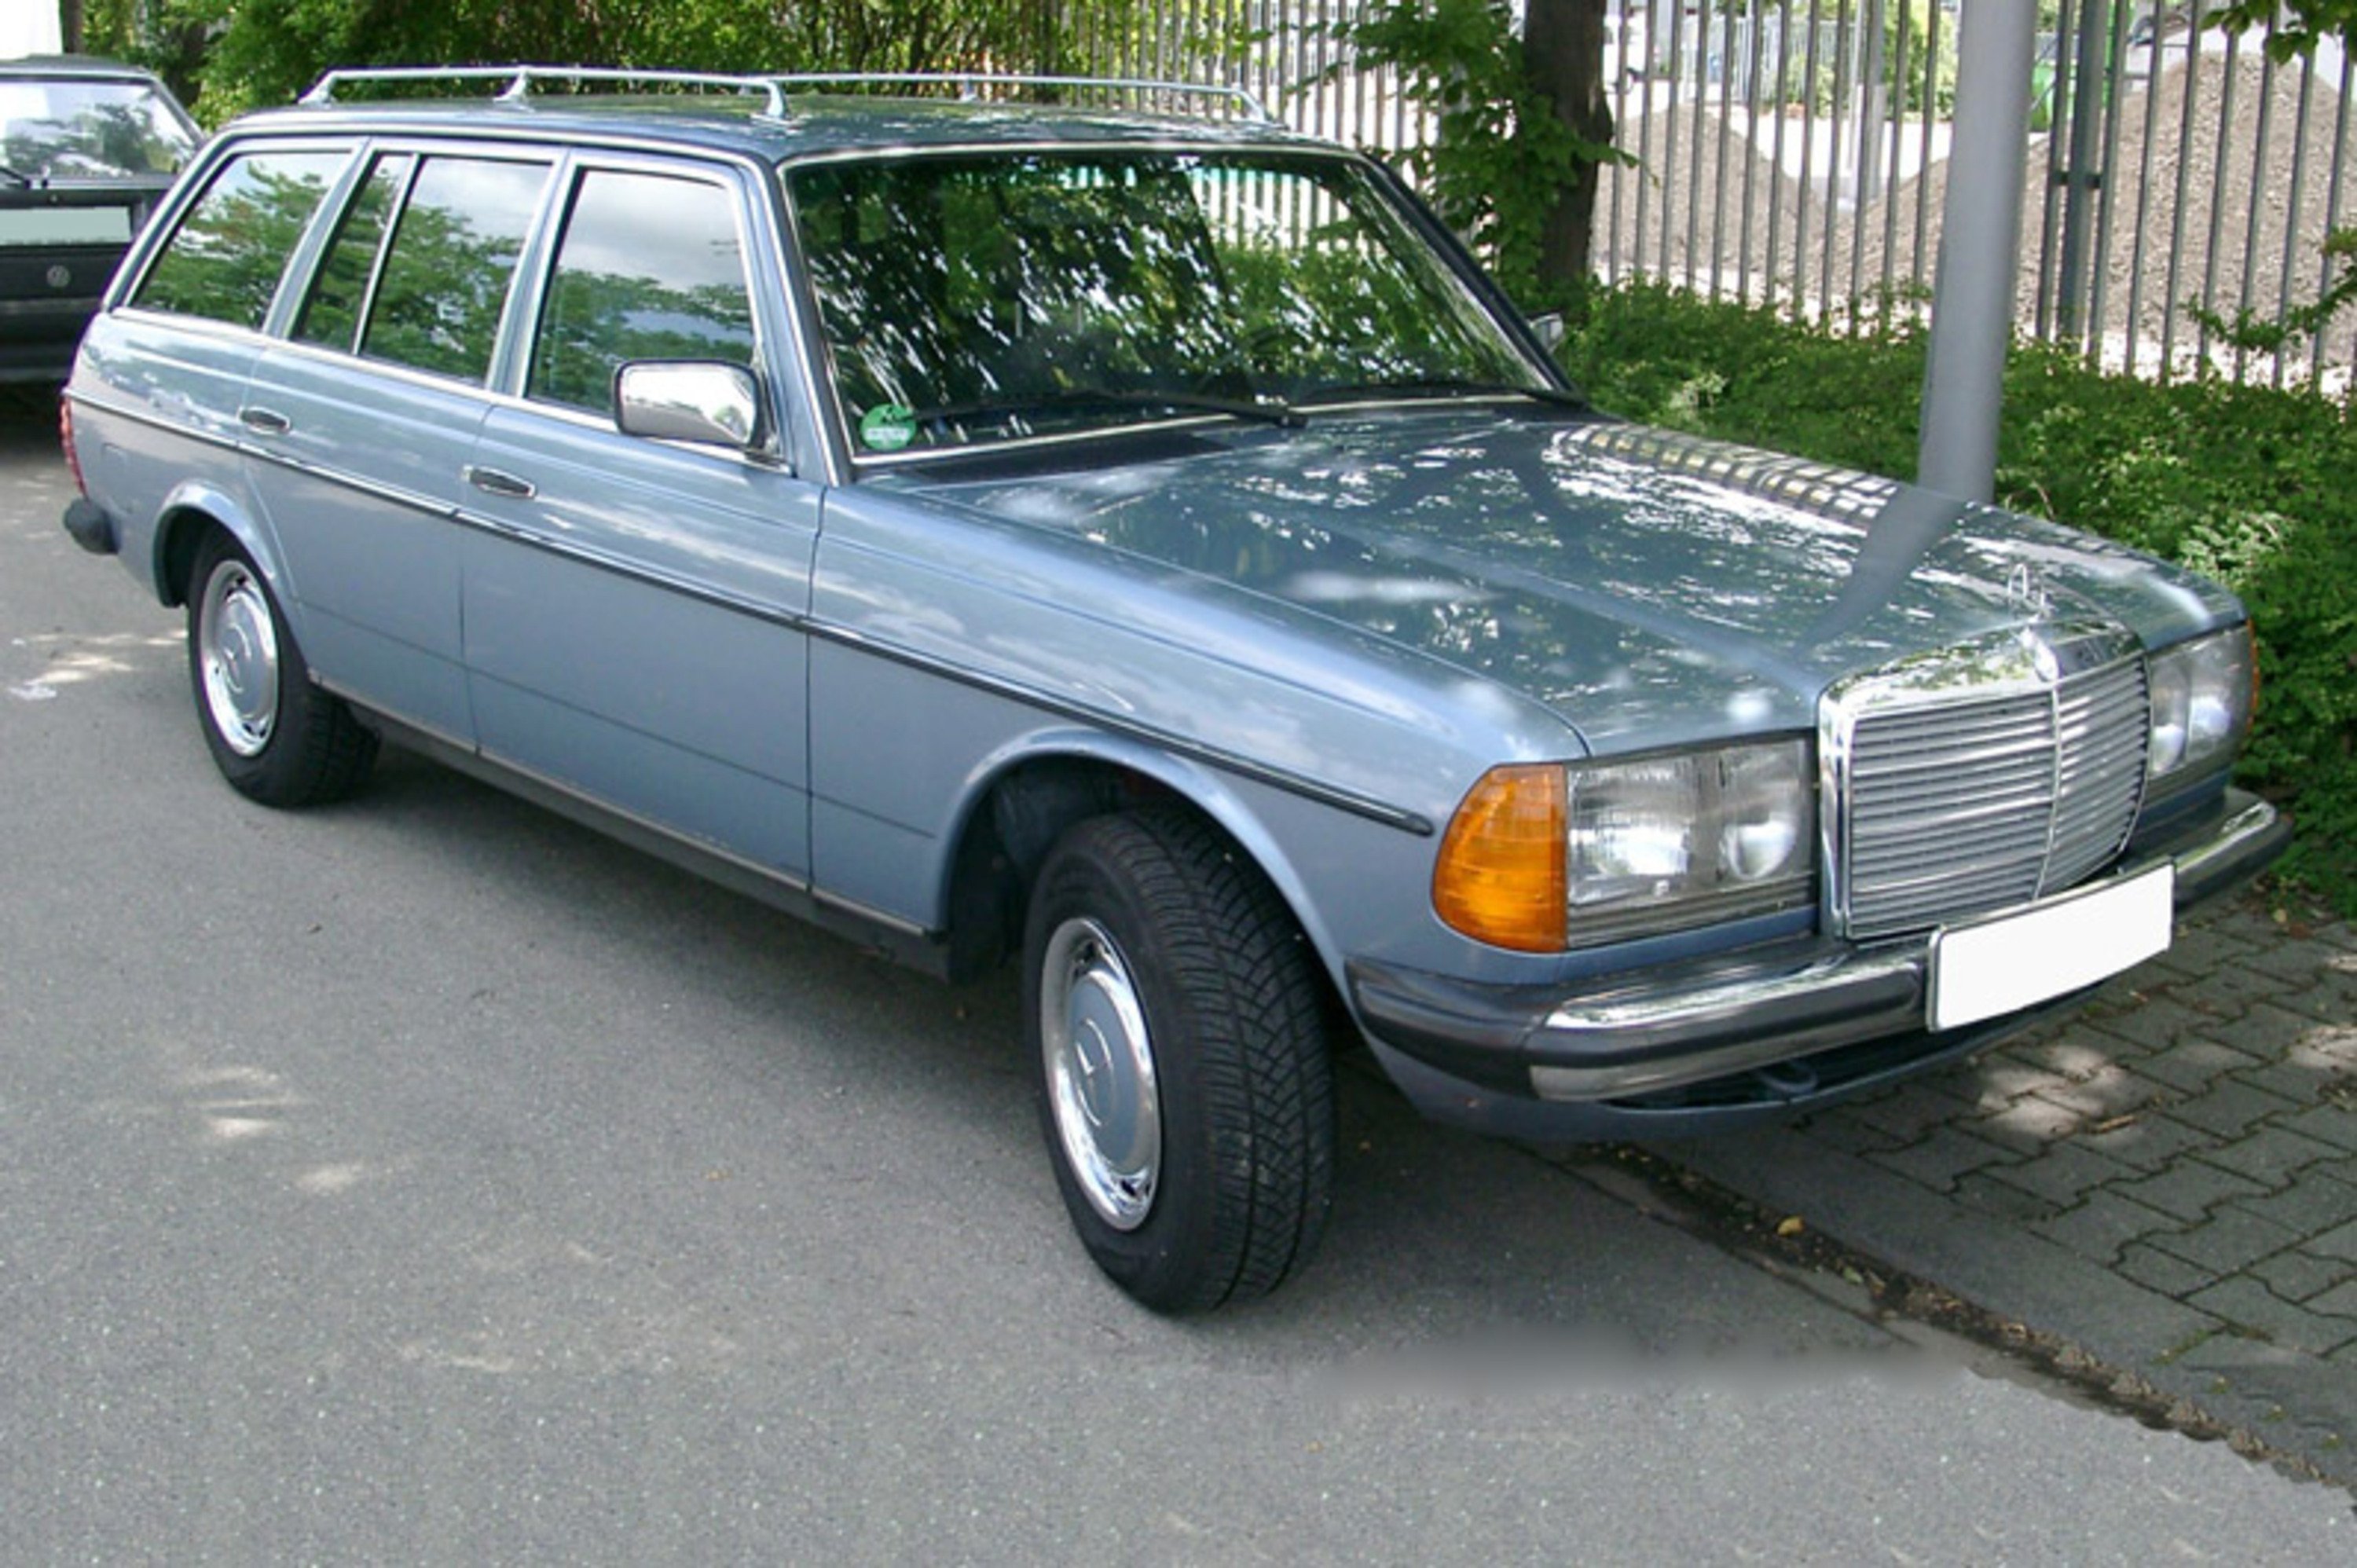 Mercedes-Benz 250 Station Wagon (1979-82)